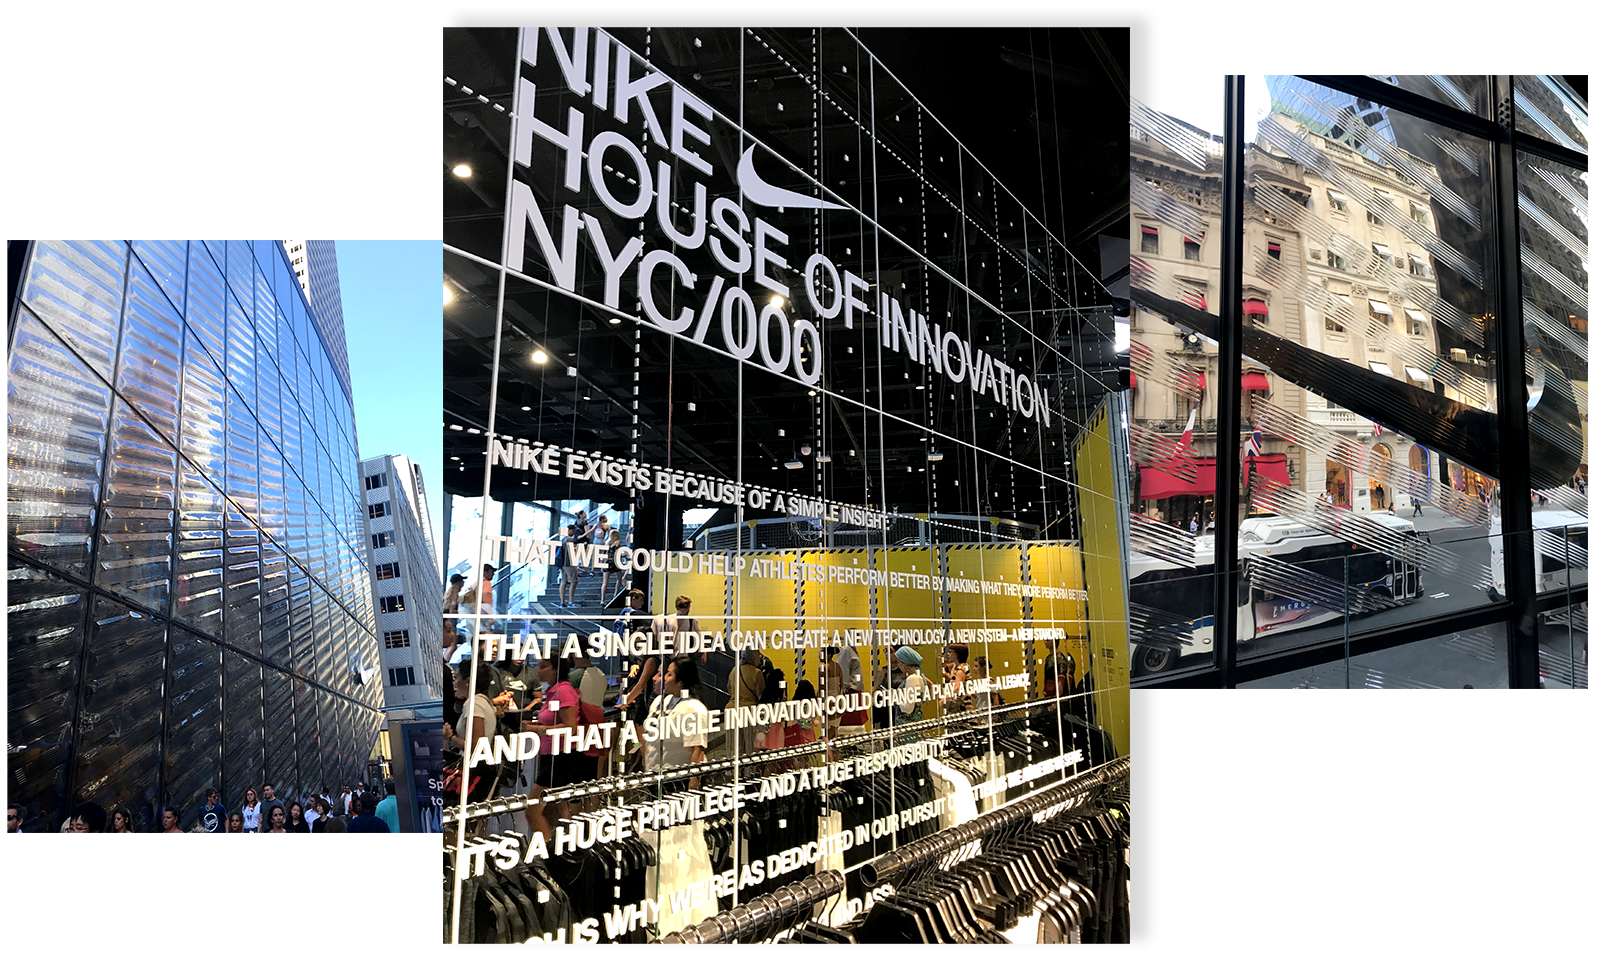 nike-innovation-store-nyc-outside-inside-views